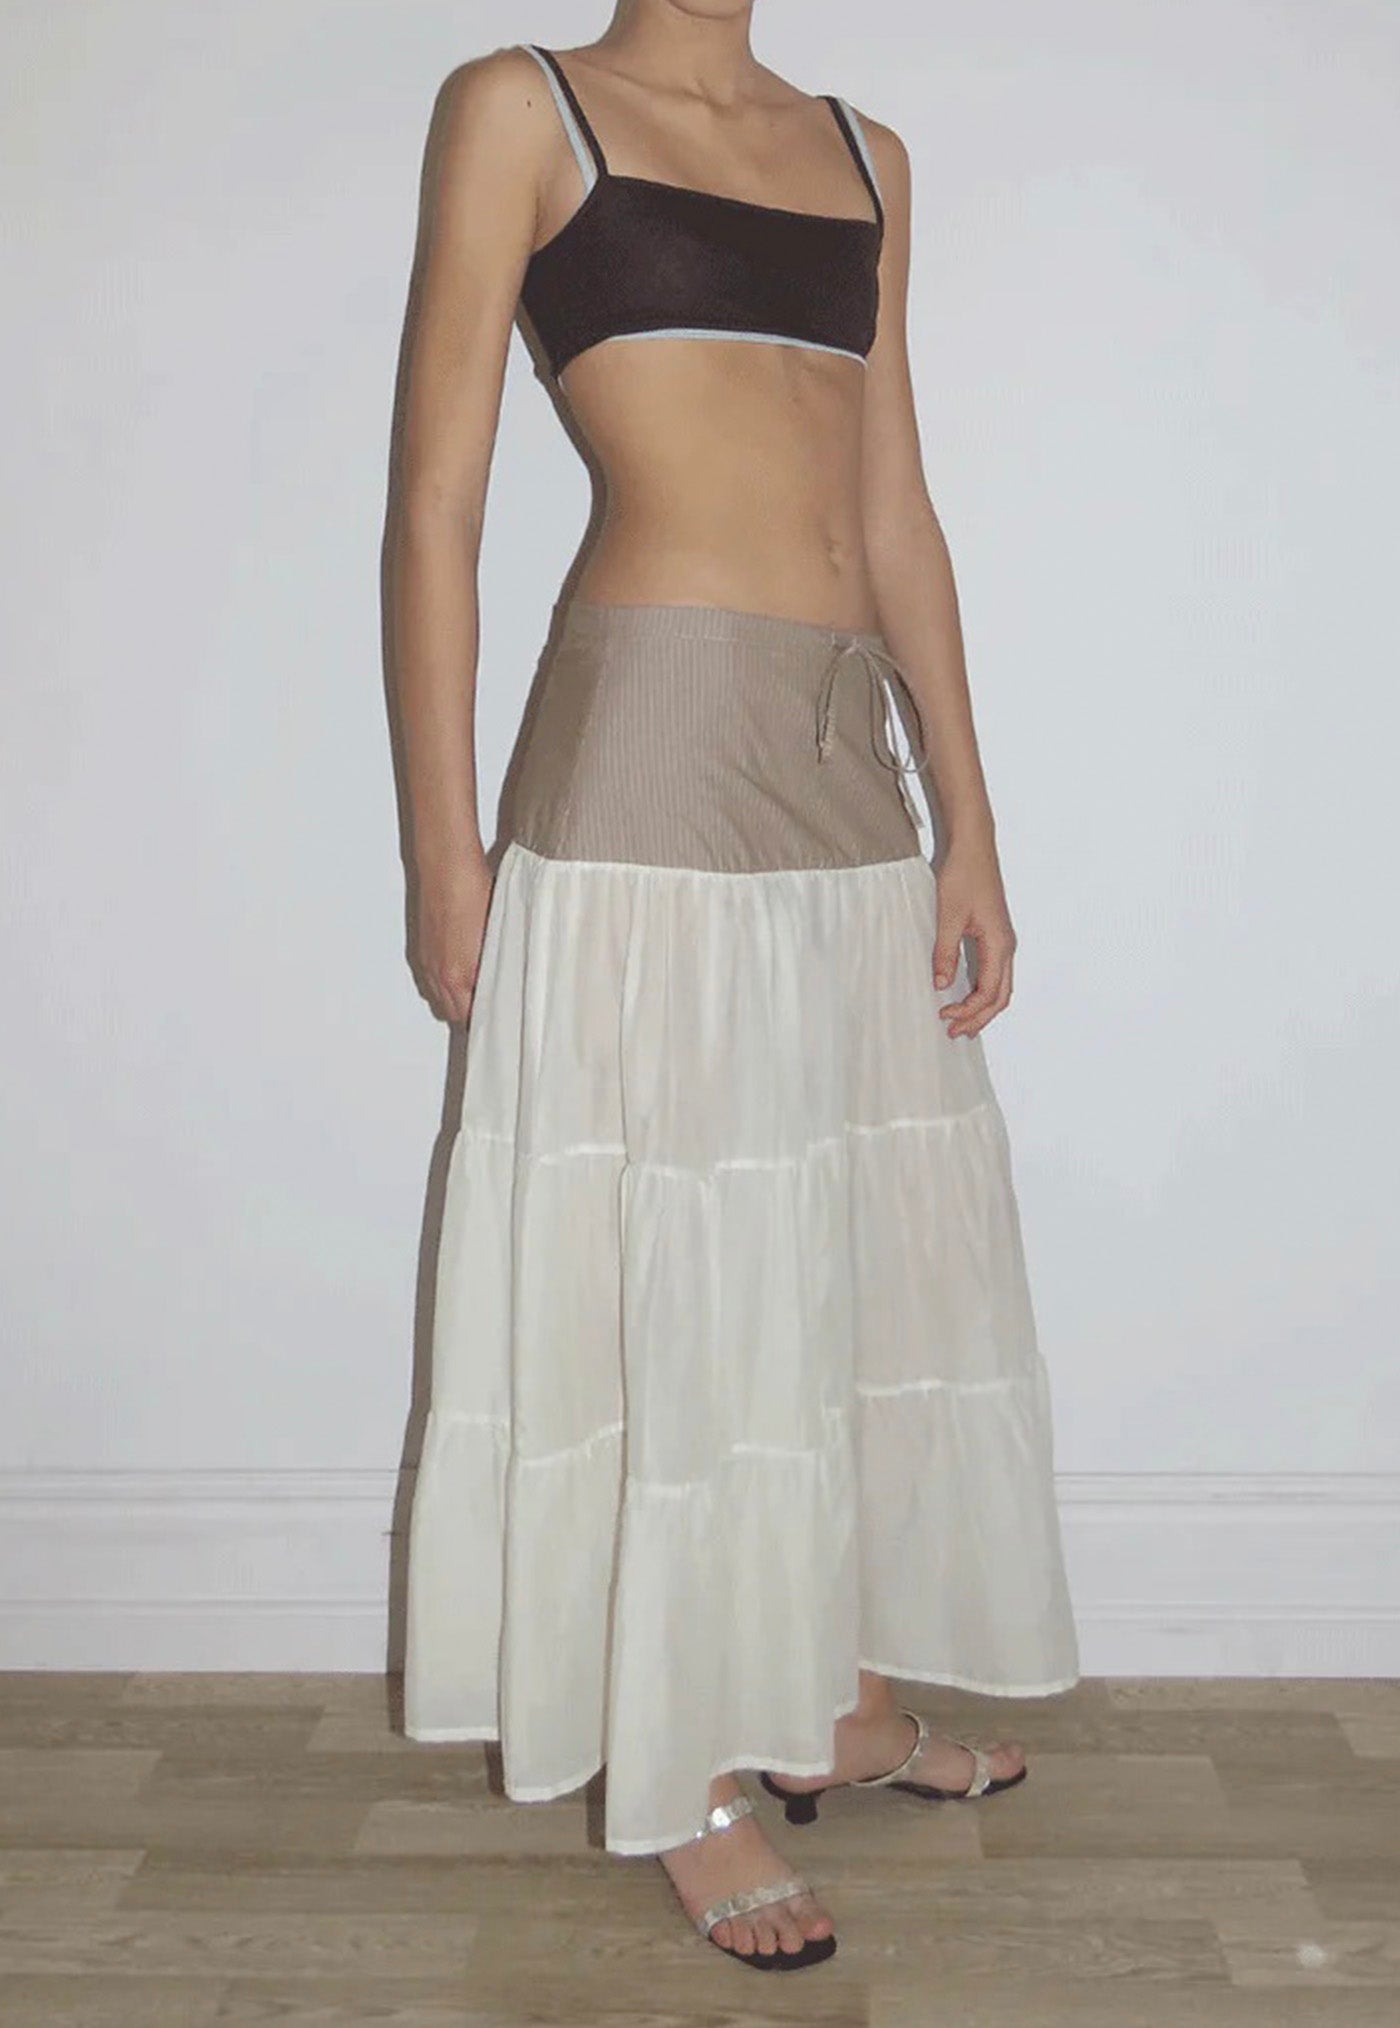 Calabria Skirt - Ecru sold by Angel Divine